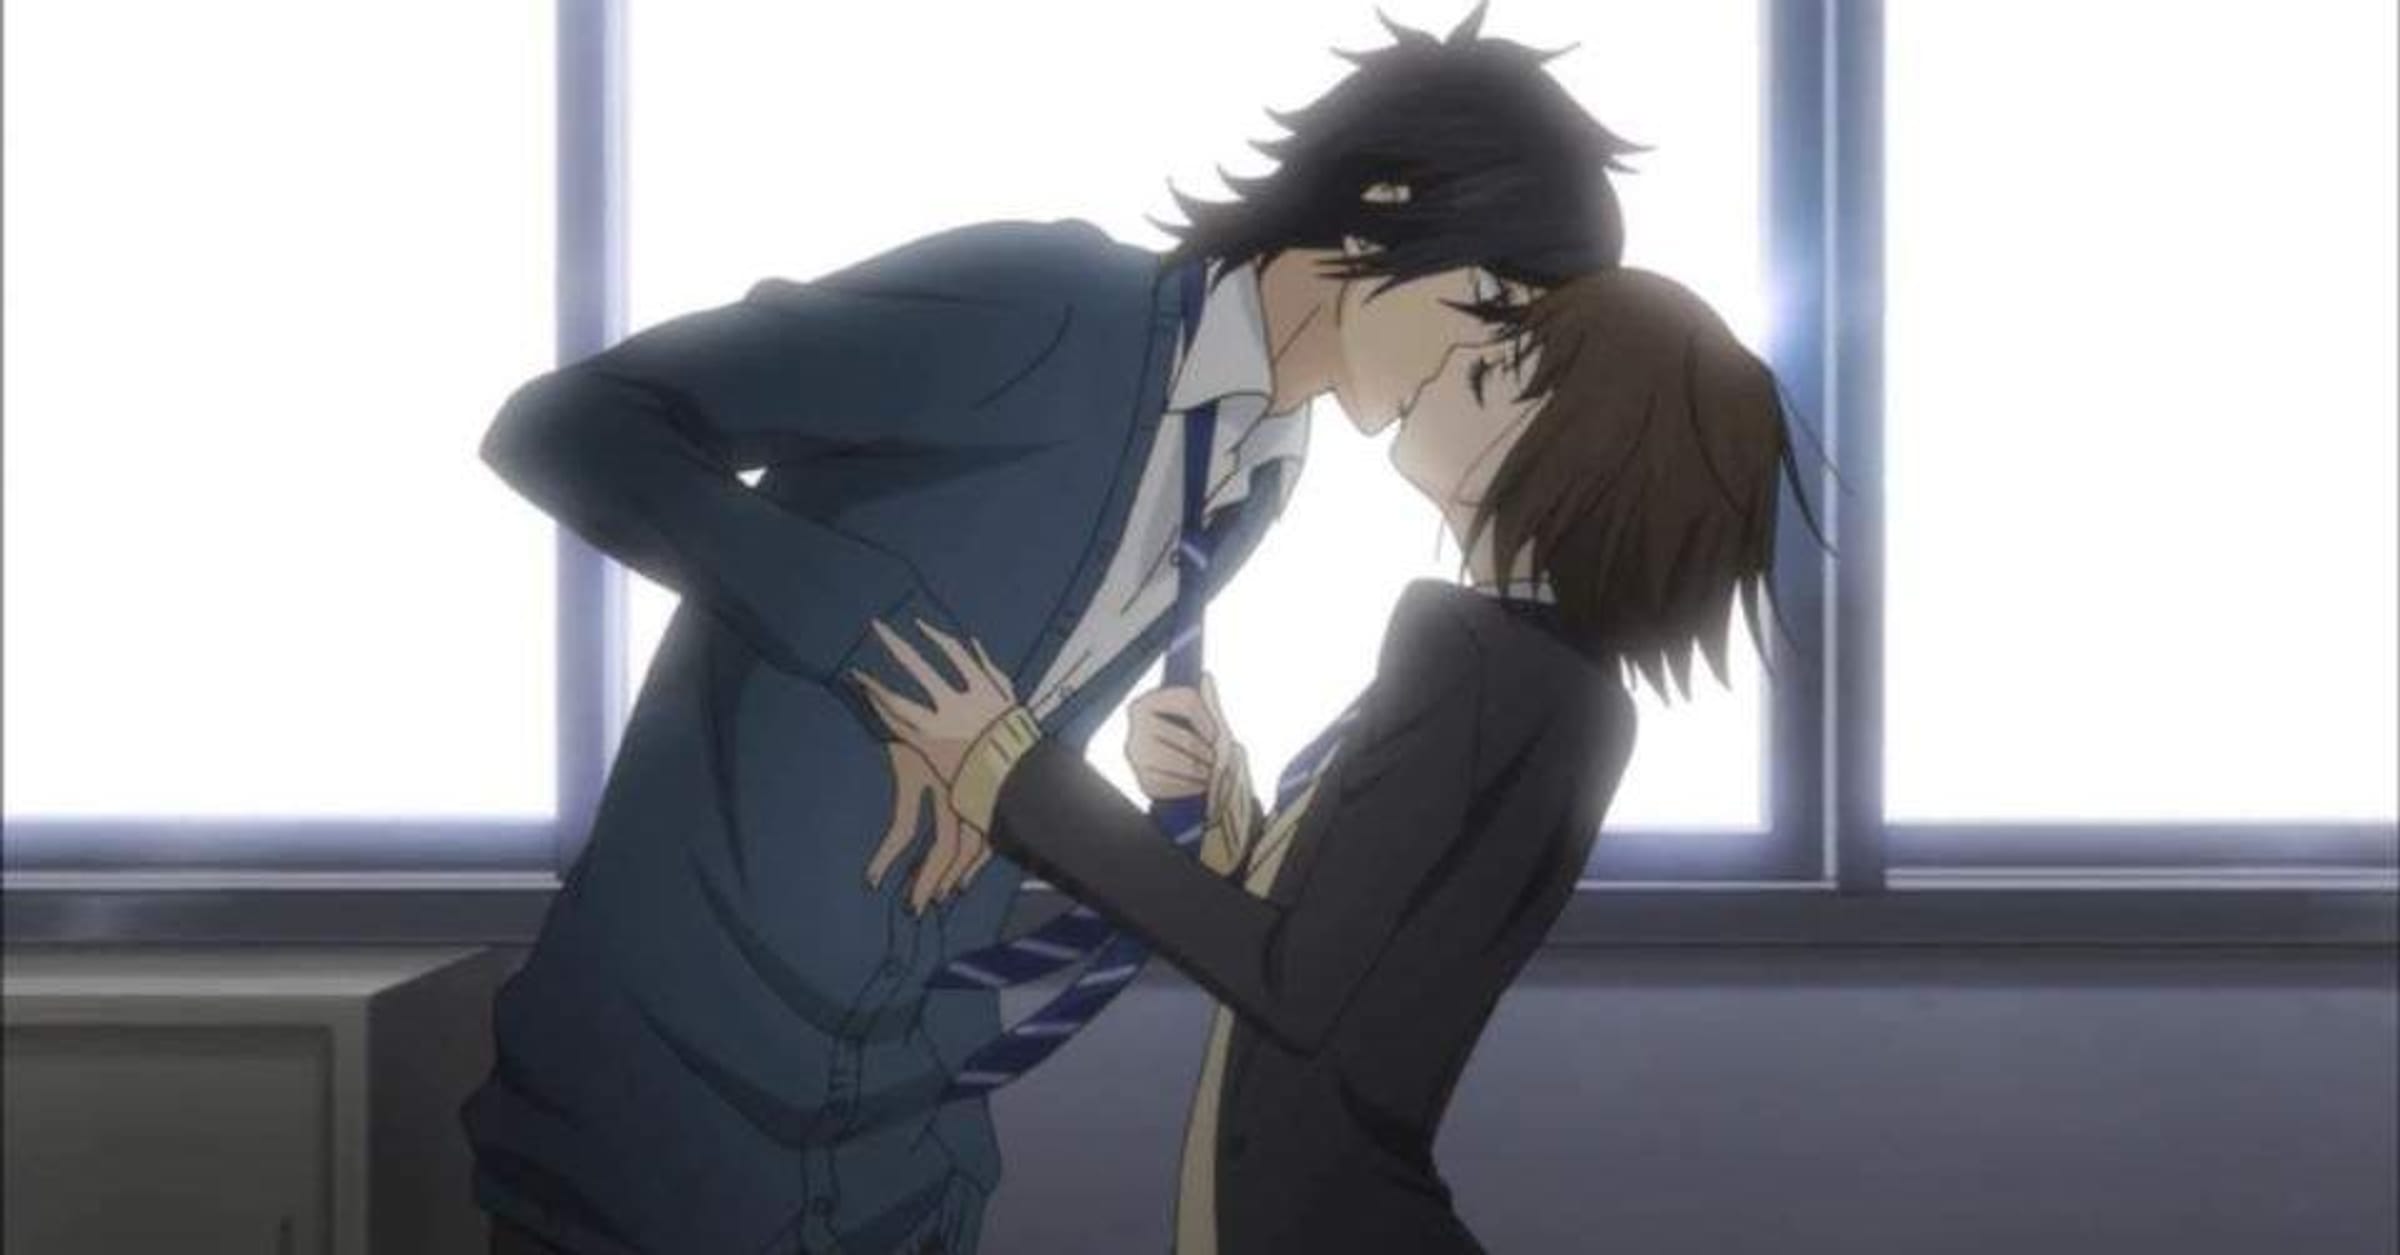 Romance Anime to Watch on Valentine's Day